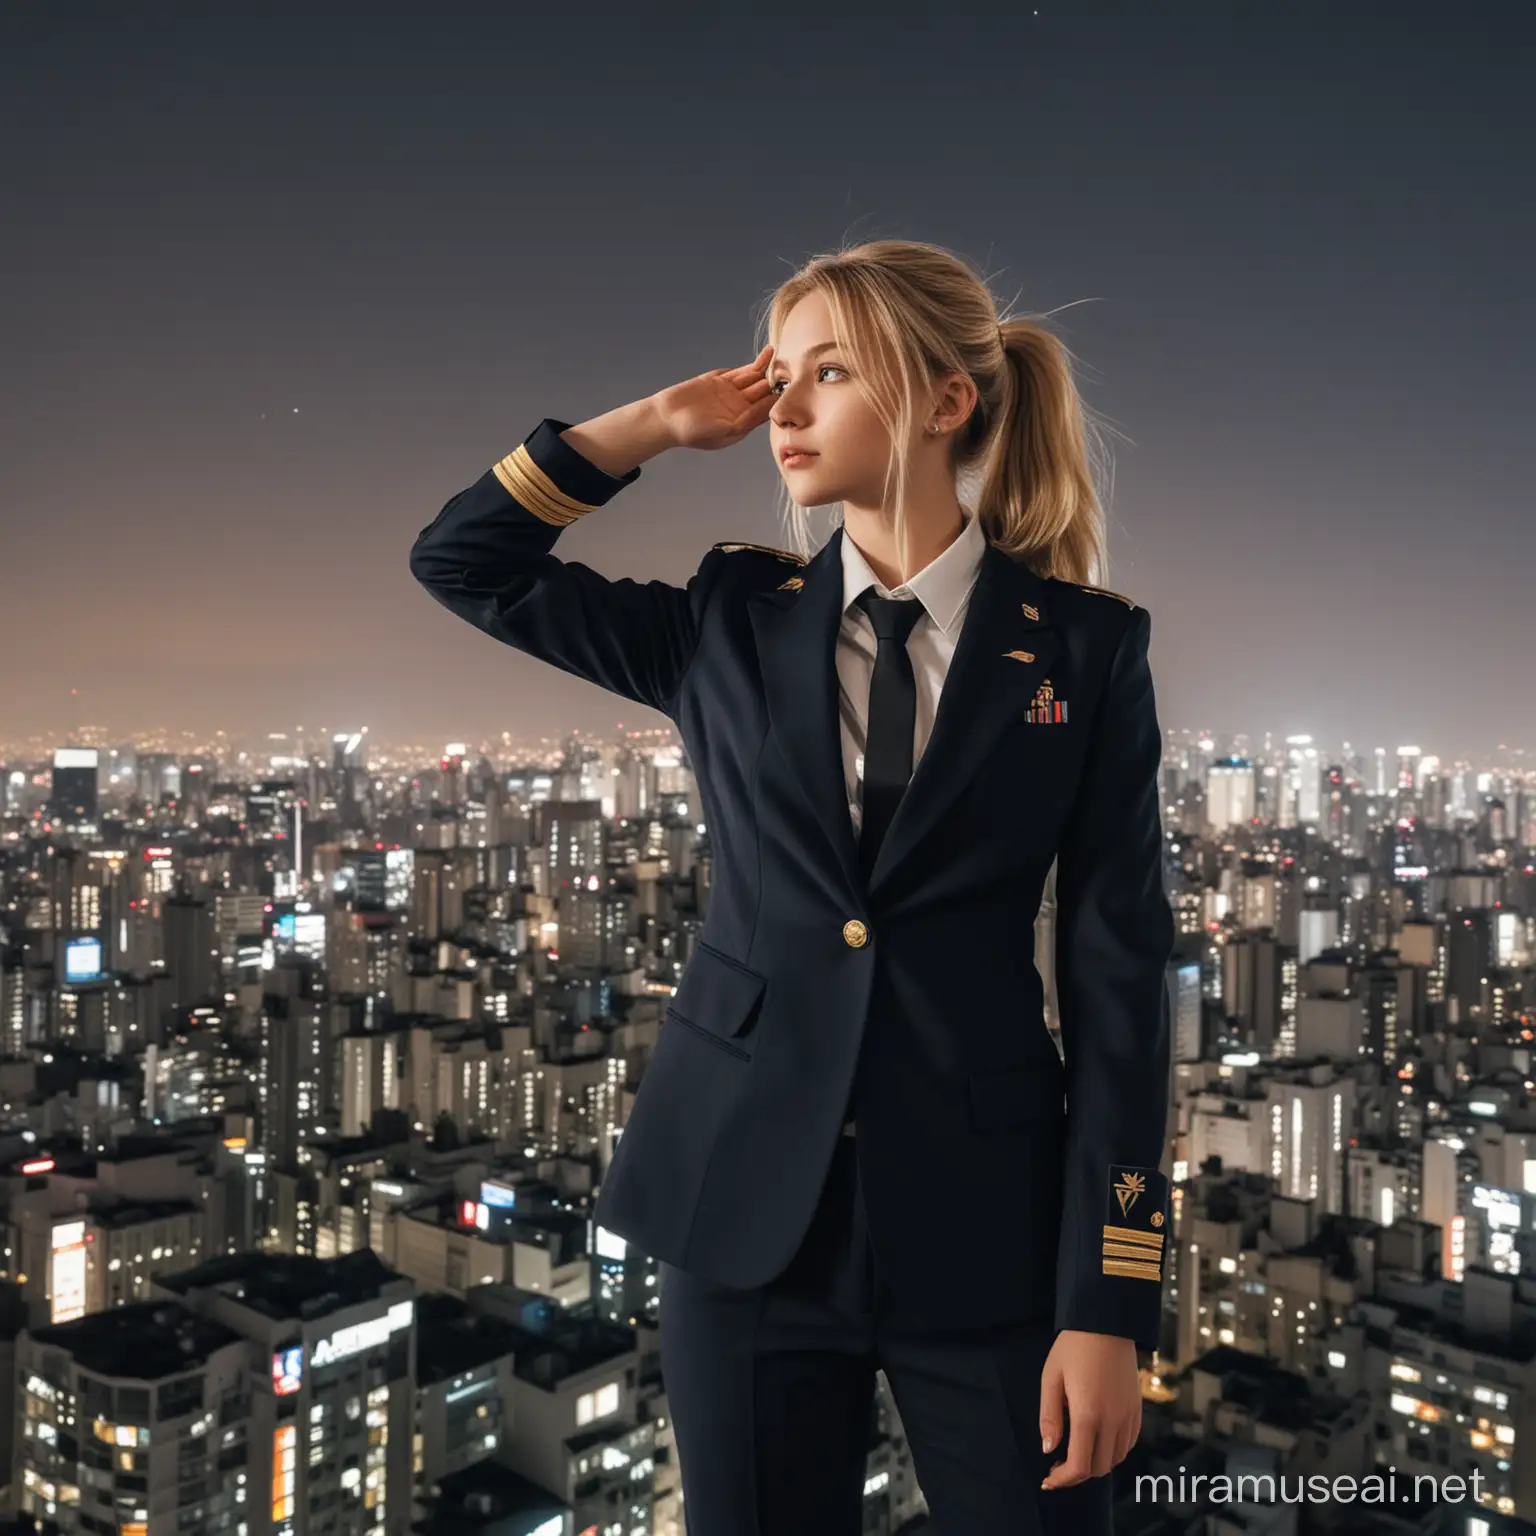 Blonde Teenager Girl Saluting on Tokyo Rooftop at Night